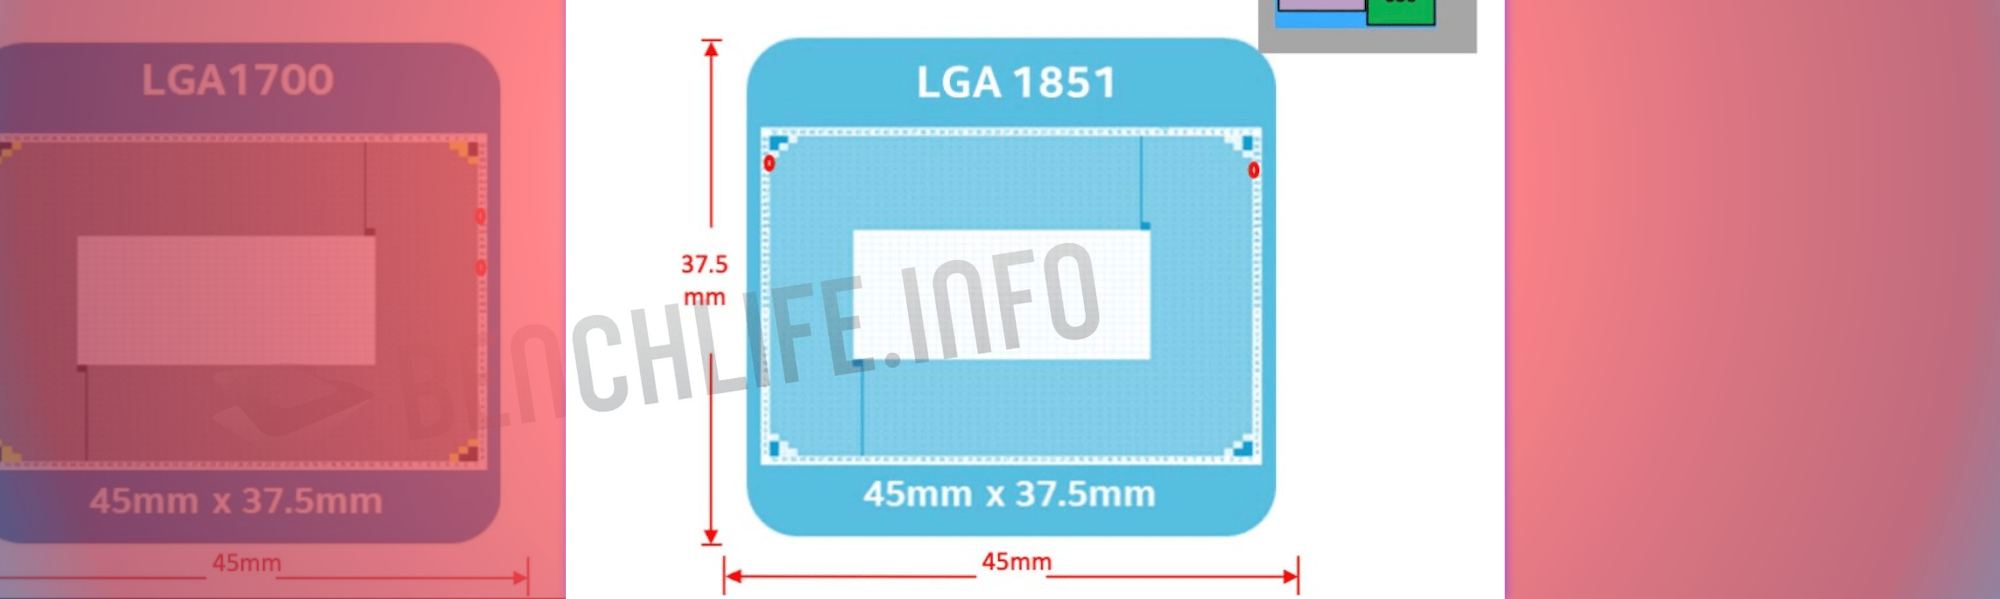 INTEL-LGA1851-METEOR-LAKE-SOCKET-banner.jpg